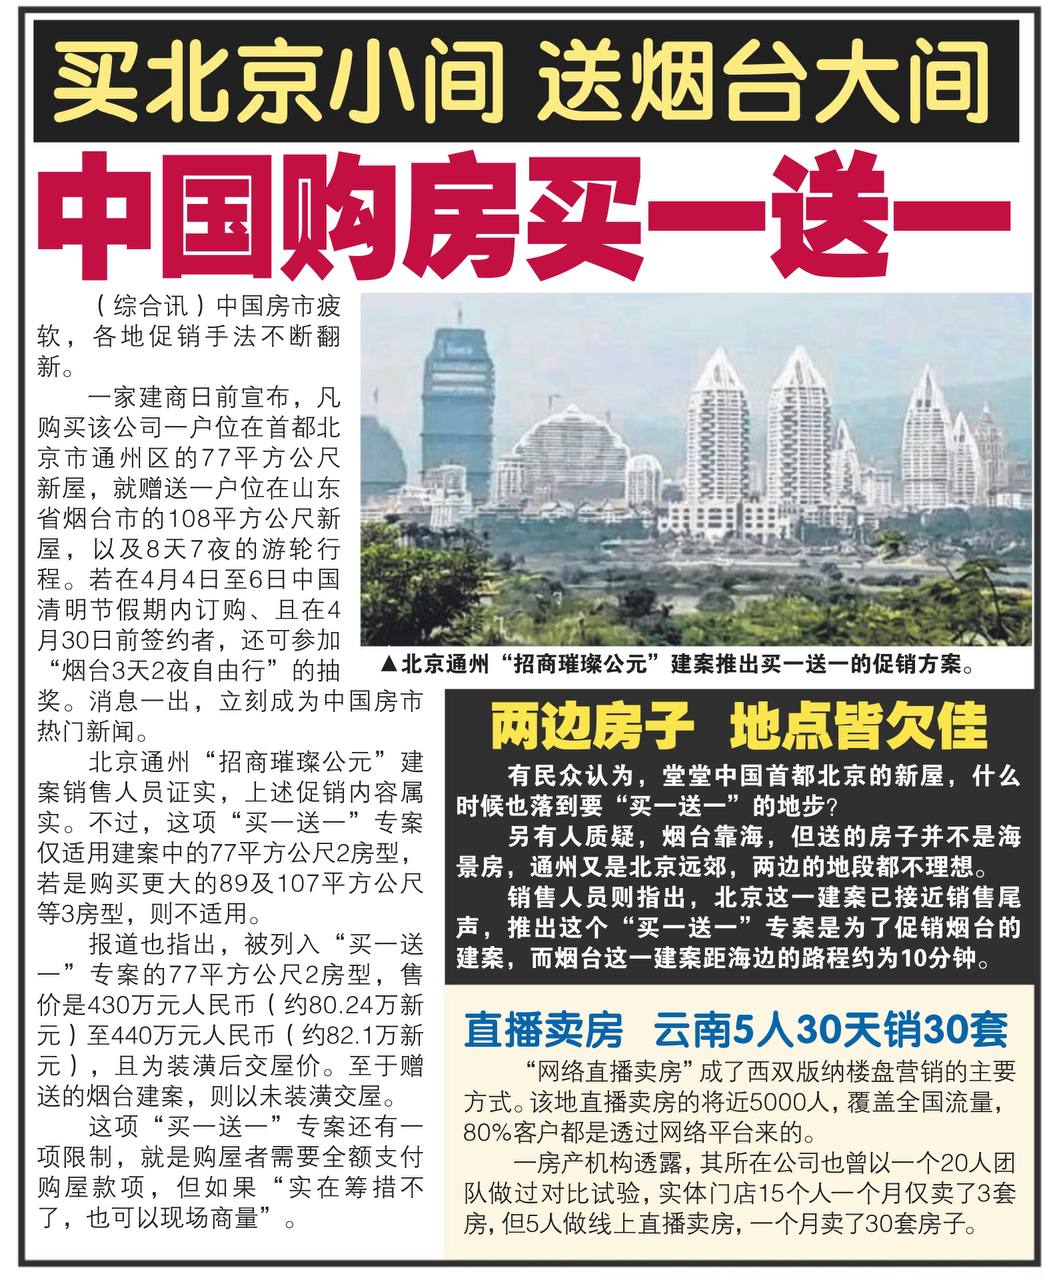 Singapore Property China Property Buy 1 free 1